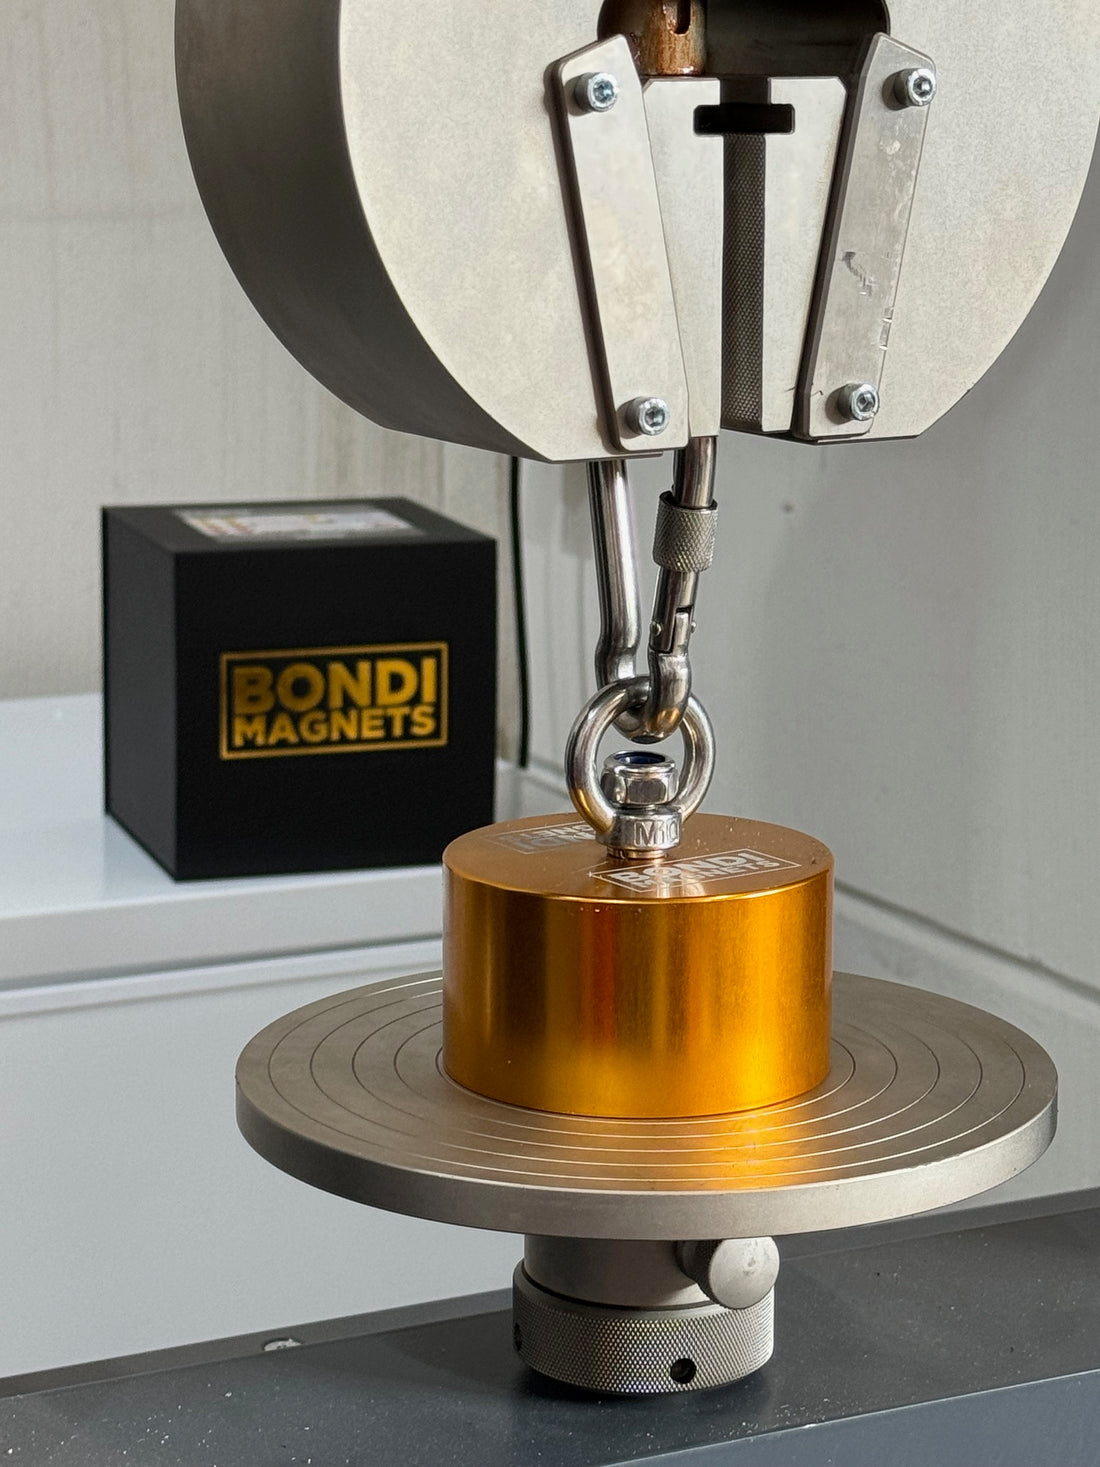 Testing the Strength of Bondi Magnets – Bondi Magnets, specially